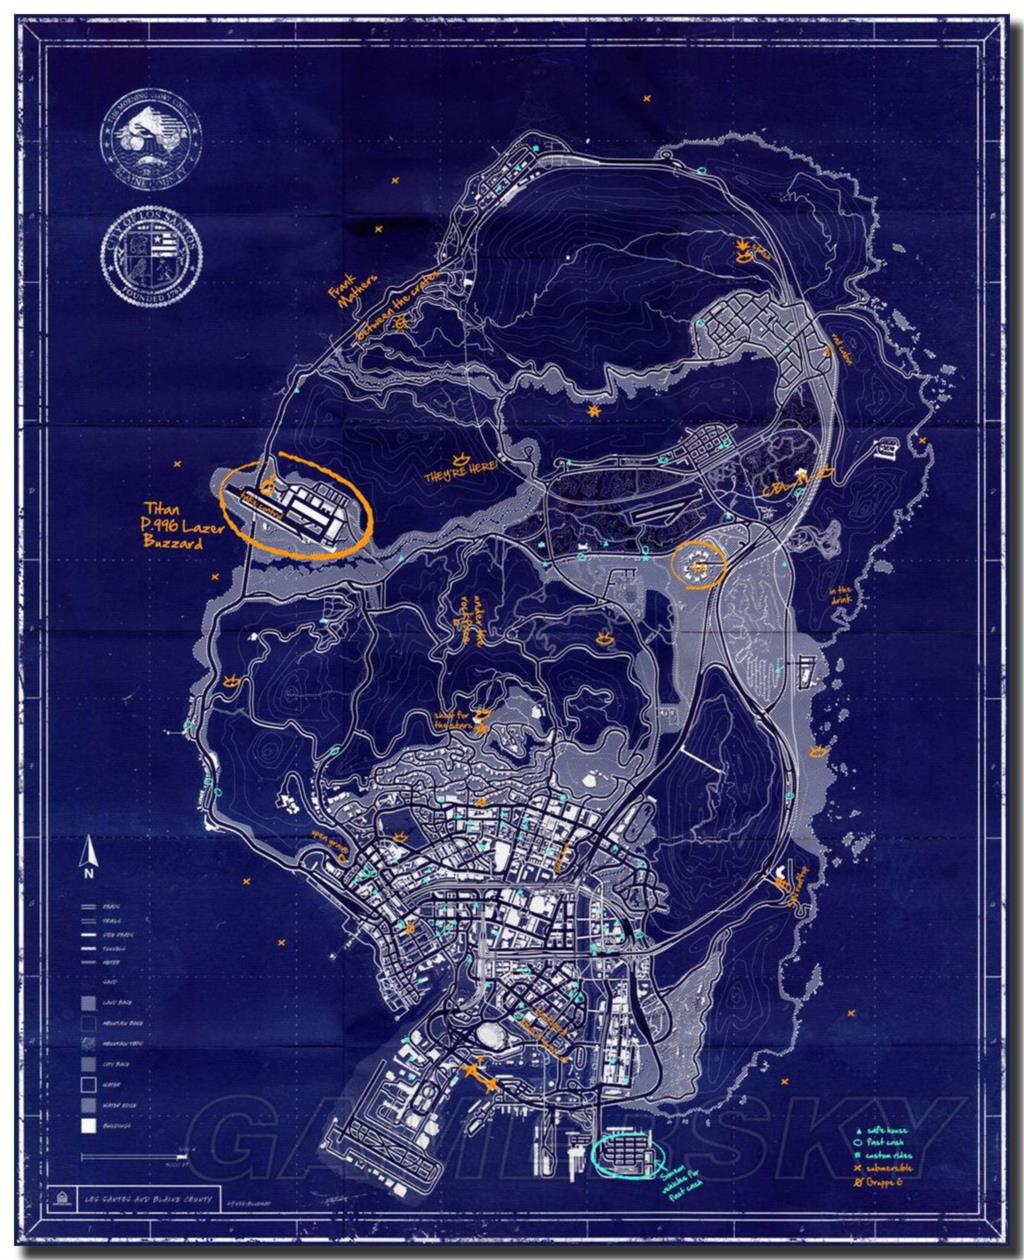 Popular Online Game GTA V Grand Theft Auto IV San Andreas Poster HD Satellite Game Maps Decorate Wallpaper 28x24 16x13 04. satellite Receiver Set Top Box. satellite Dish Signal Finderwallpaper Love